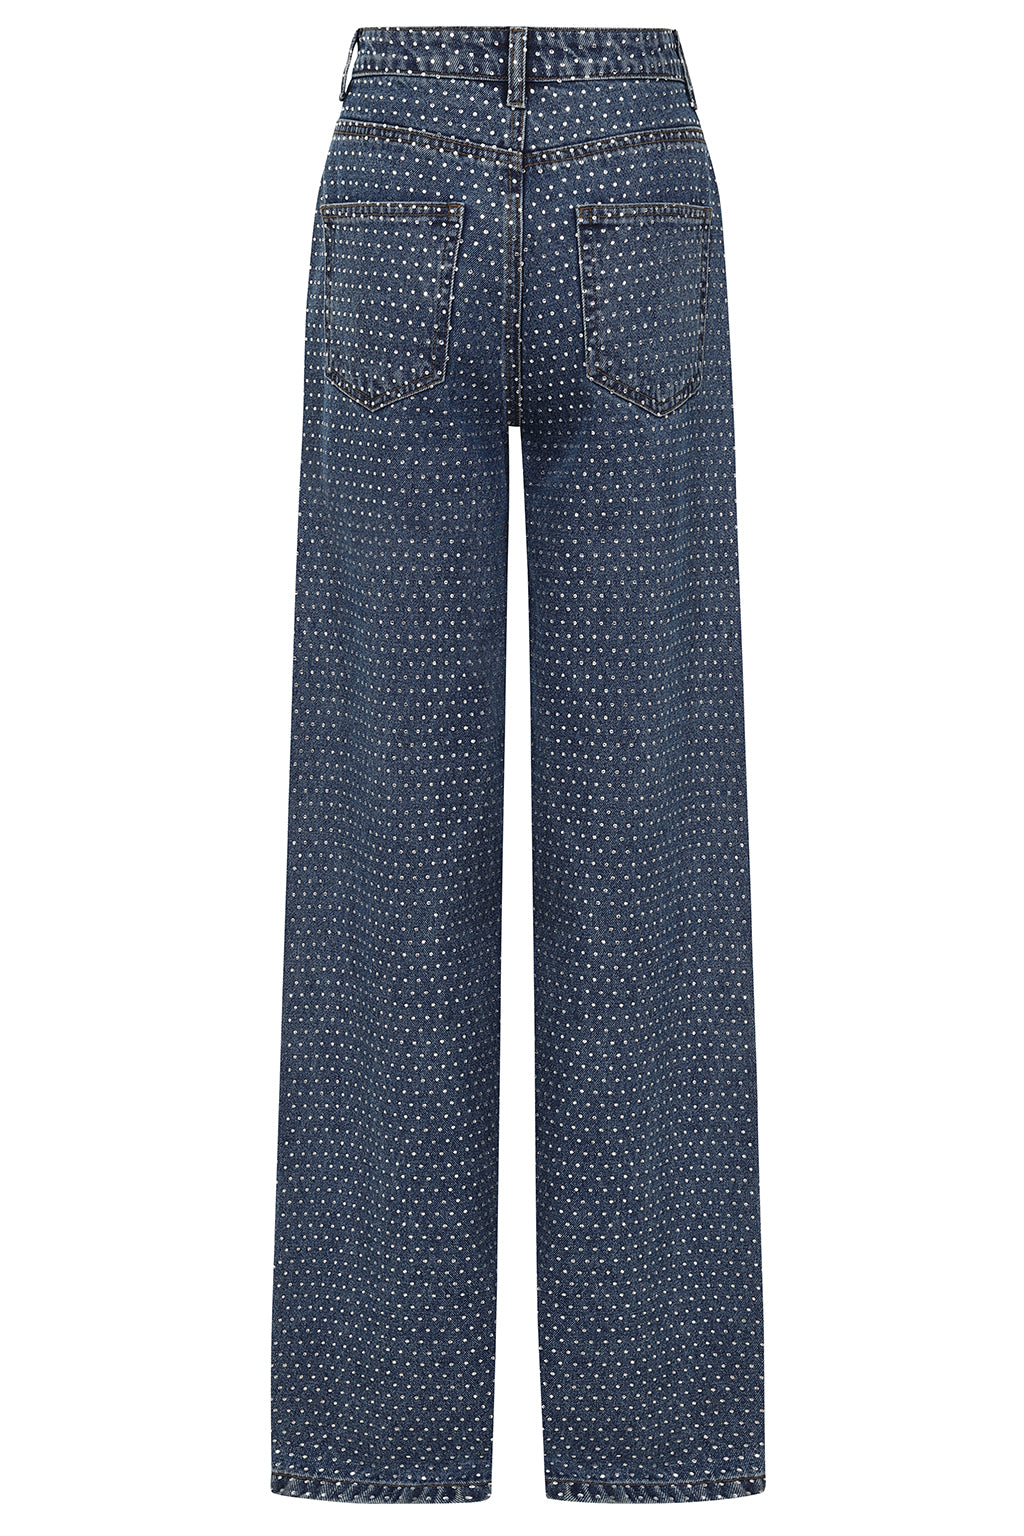 LILLIE Crystal Embellished Straight Leg Denim Jeans in Dark Blue